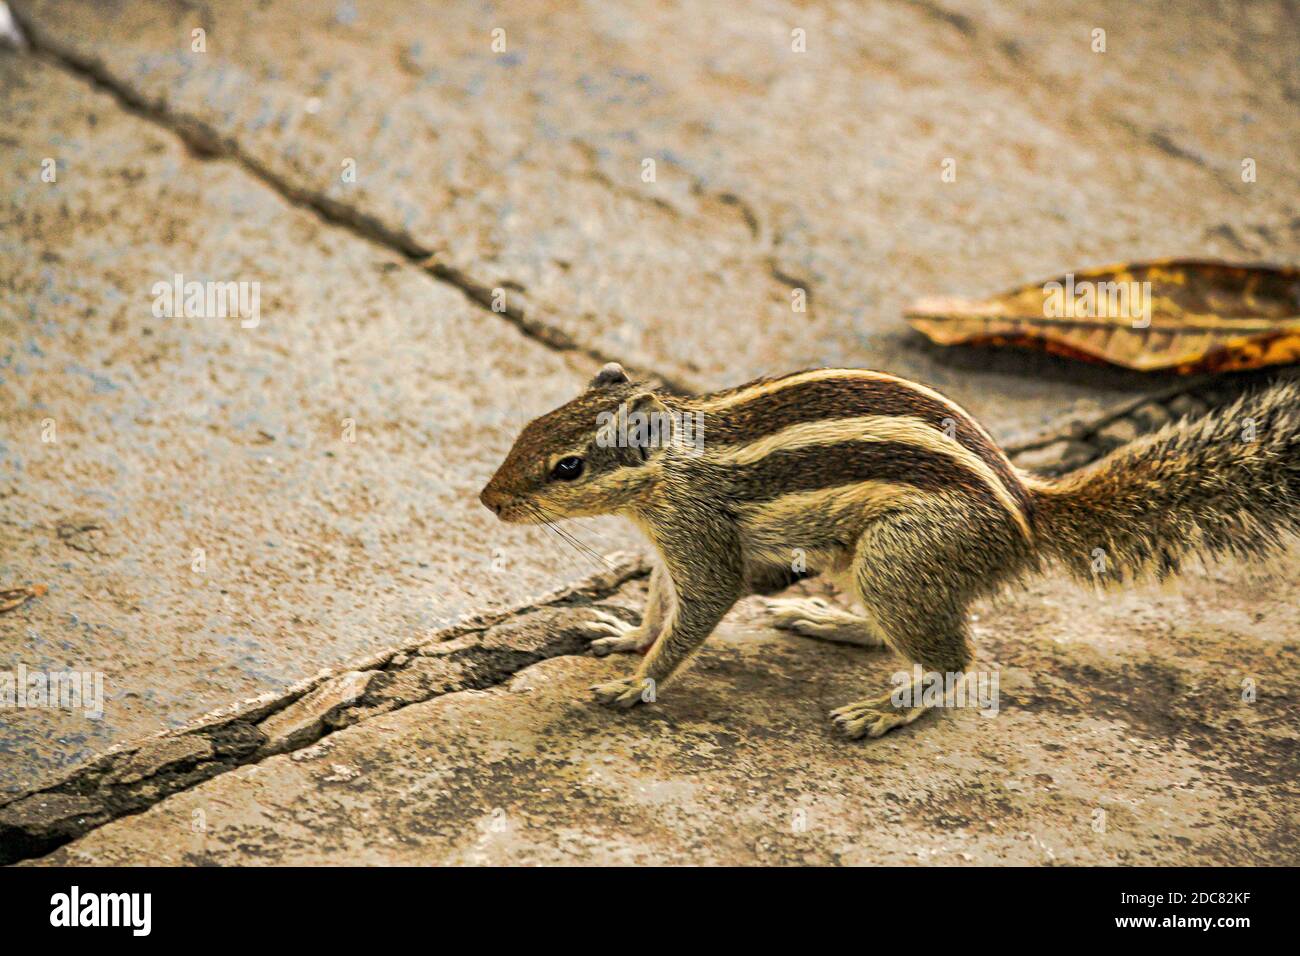 Scoiattolo o chipmunks in rajasthan , india/ fauna selvatica indiana, carino roditore animale Foto Stock